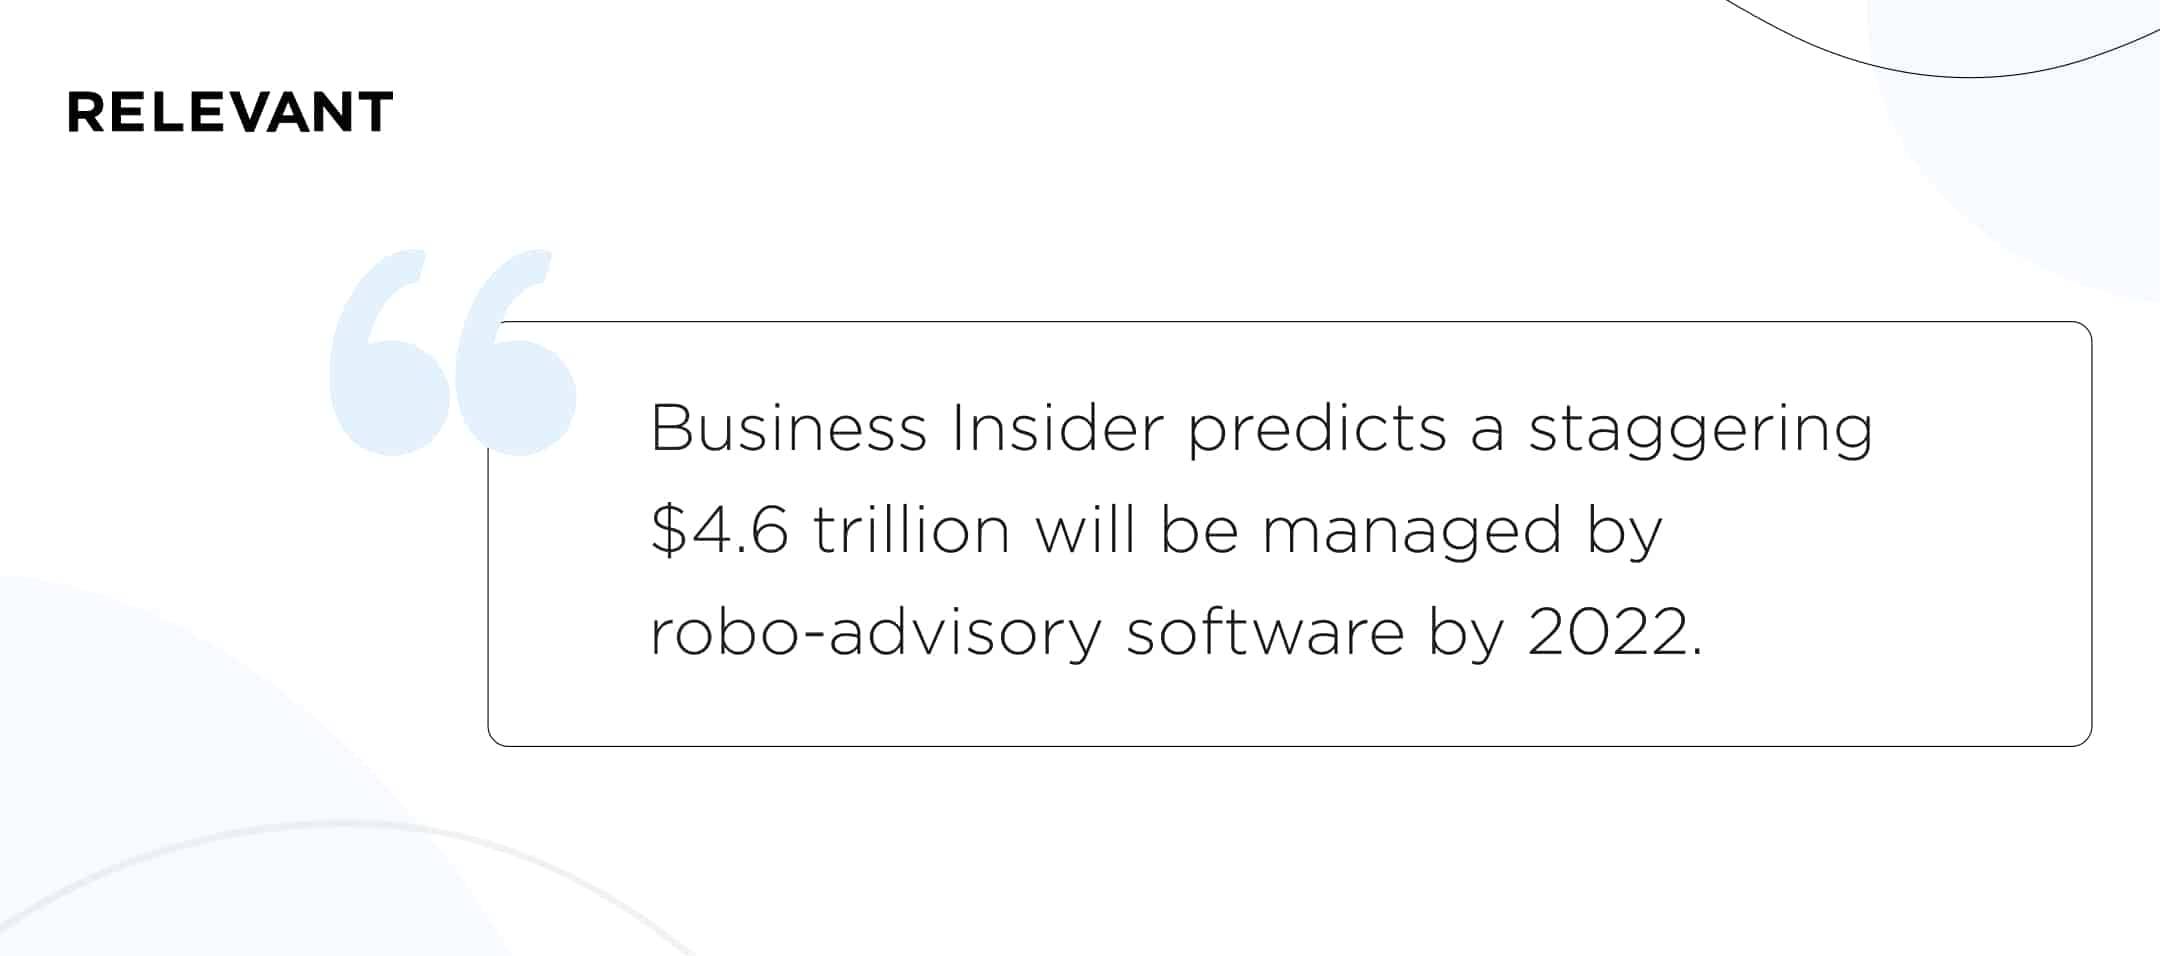 robo-advisory software development trends